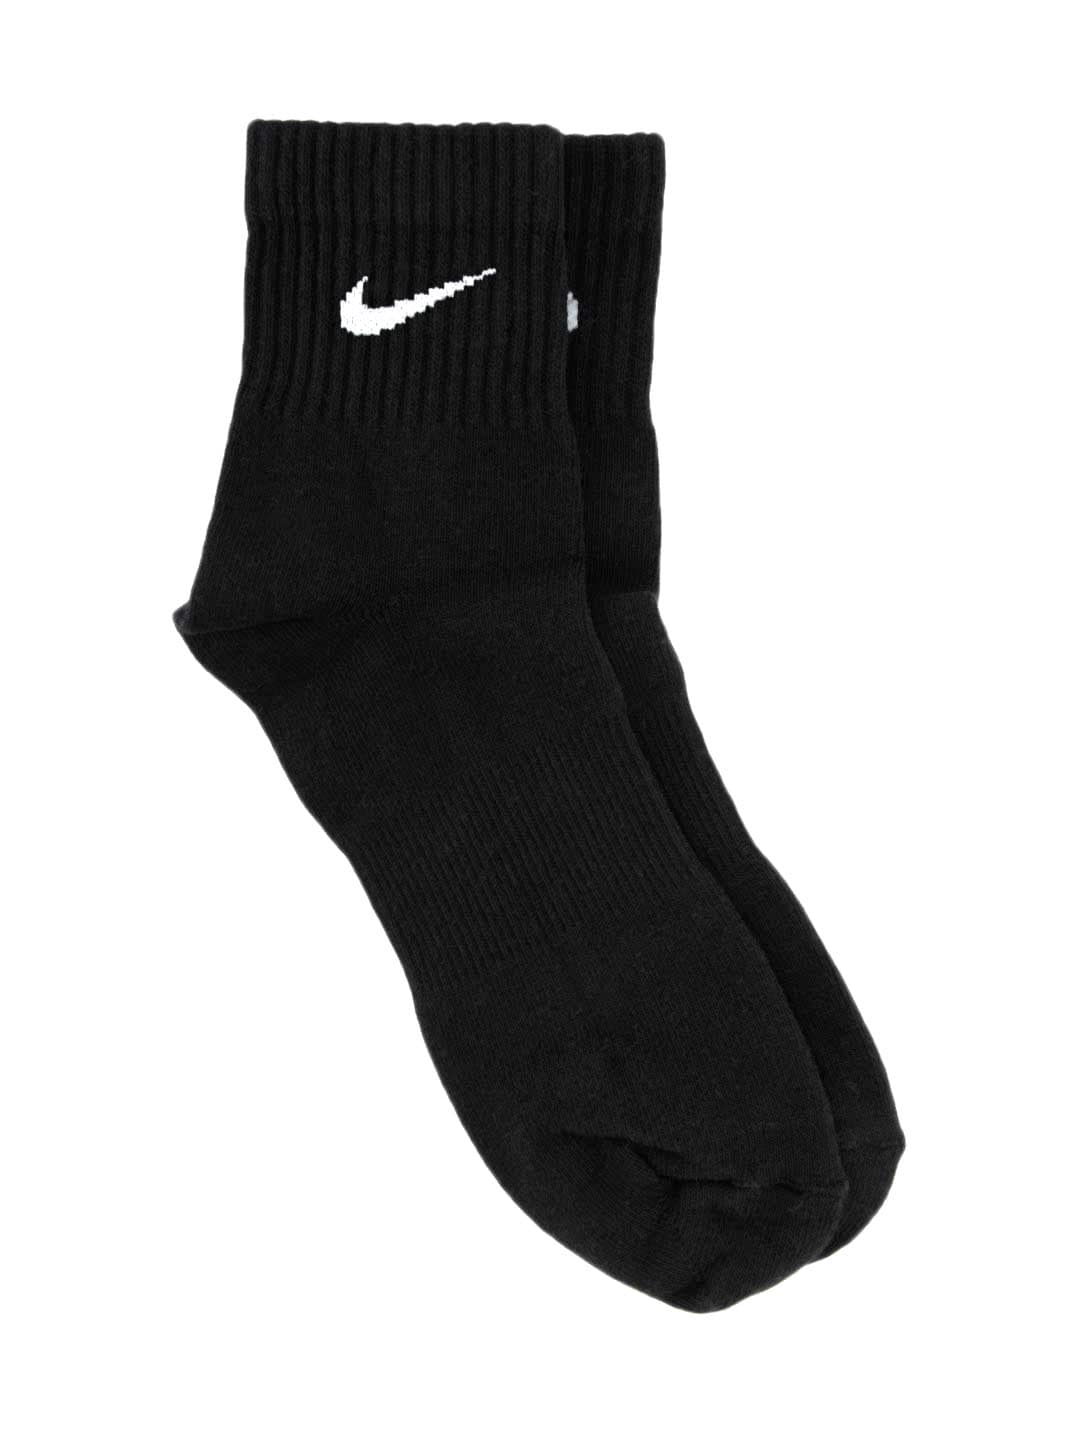 Nike Unisex Sports Black Socks